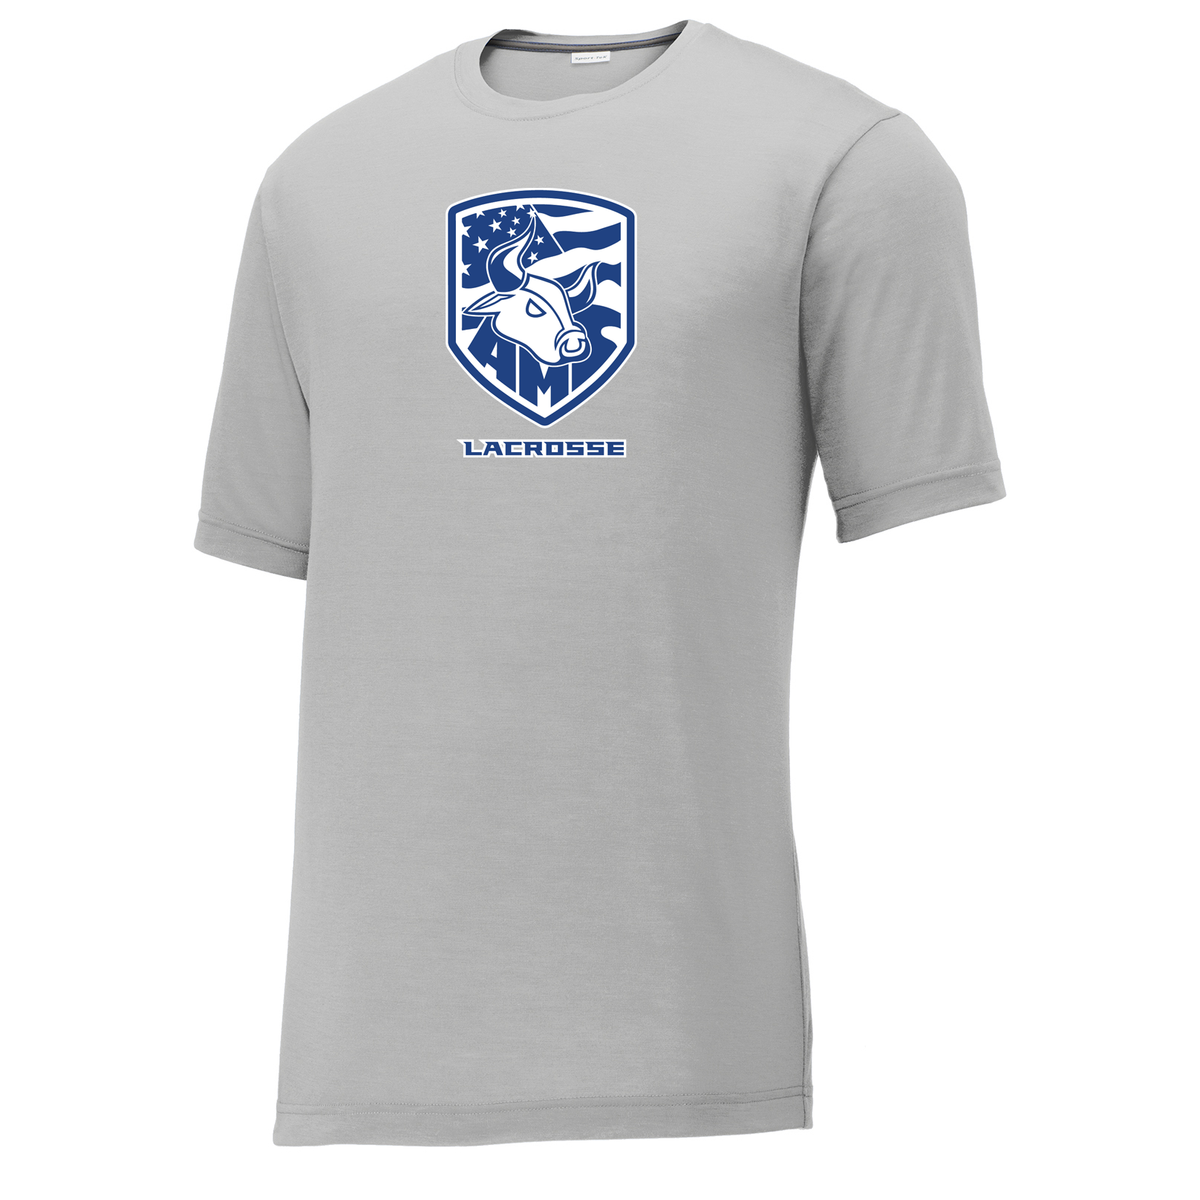 Accompsett Lacrosse CottonTouch Performance T-Shirt